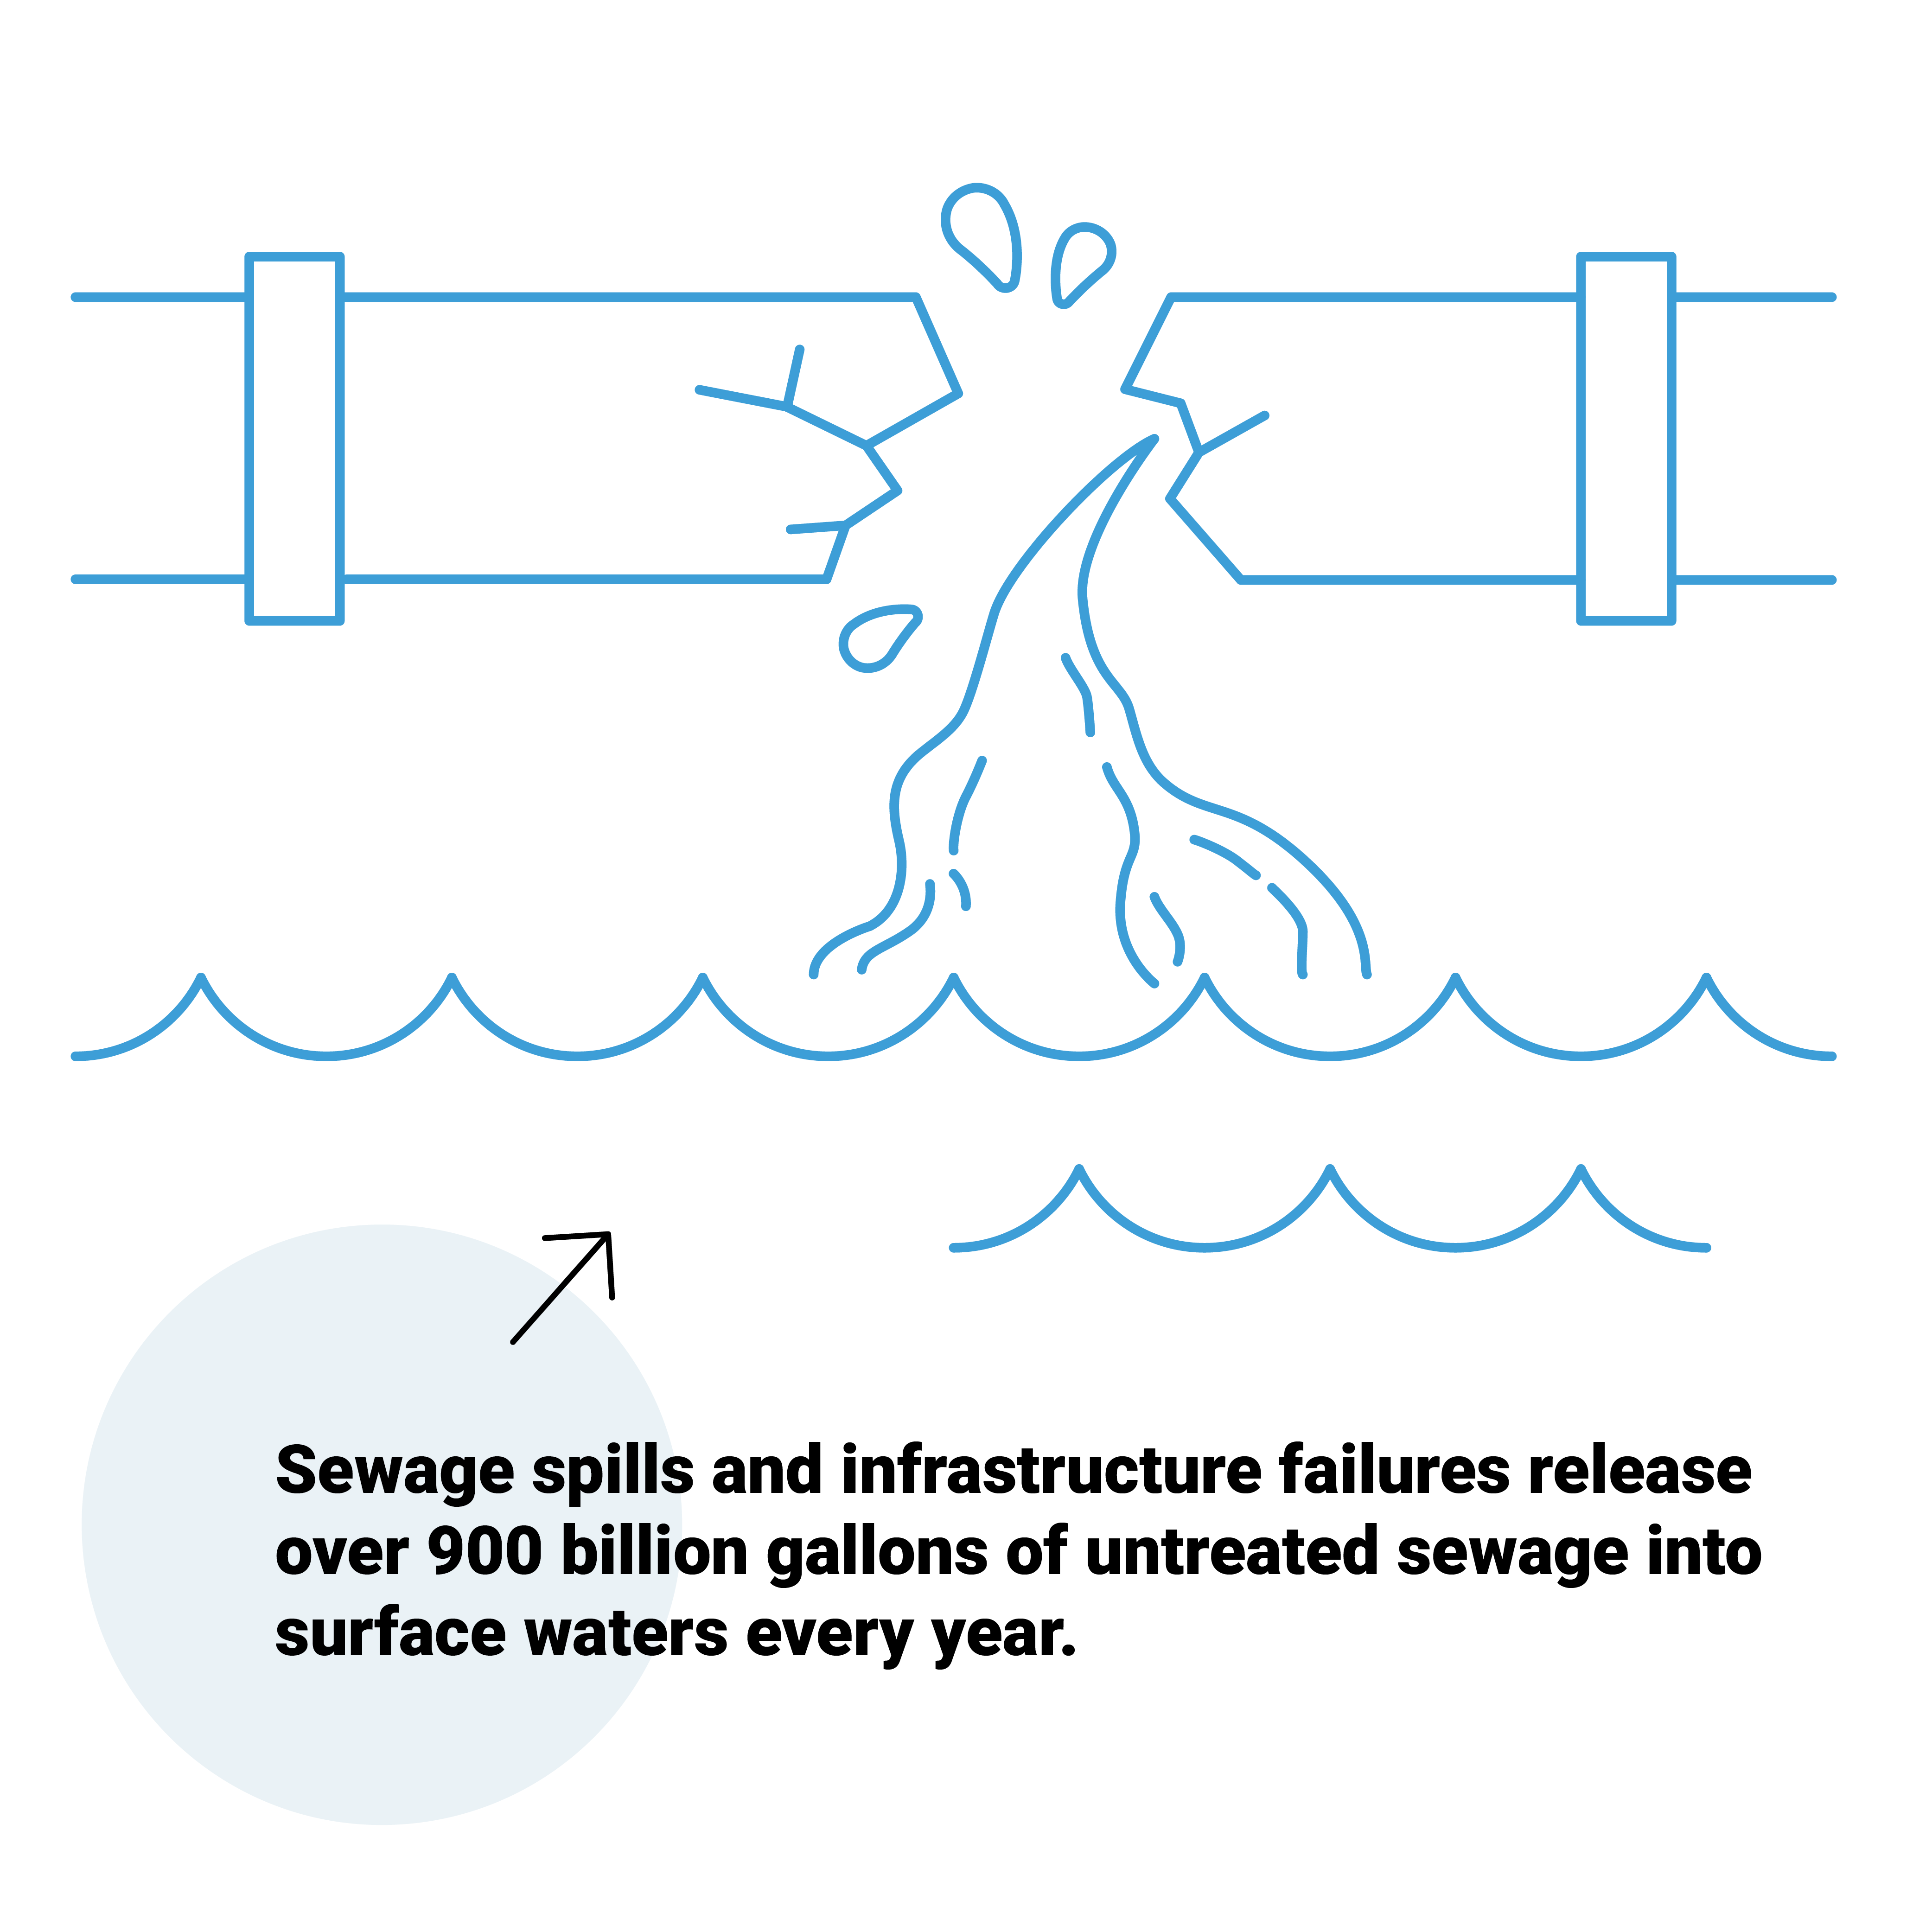 sewage pollution statistic illustration